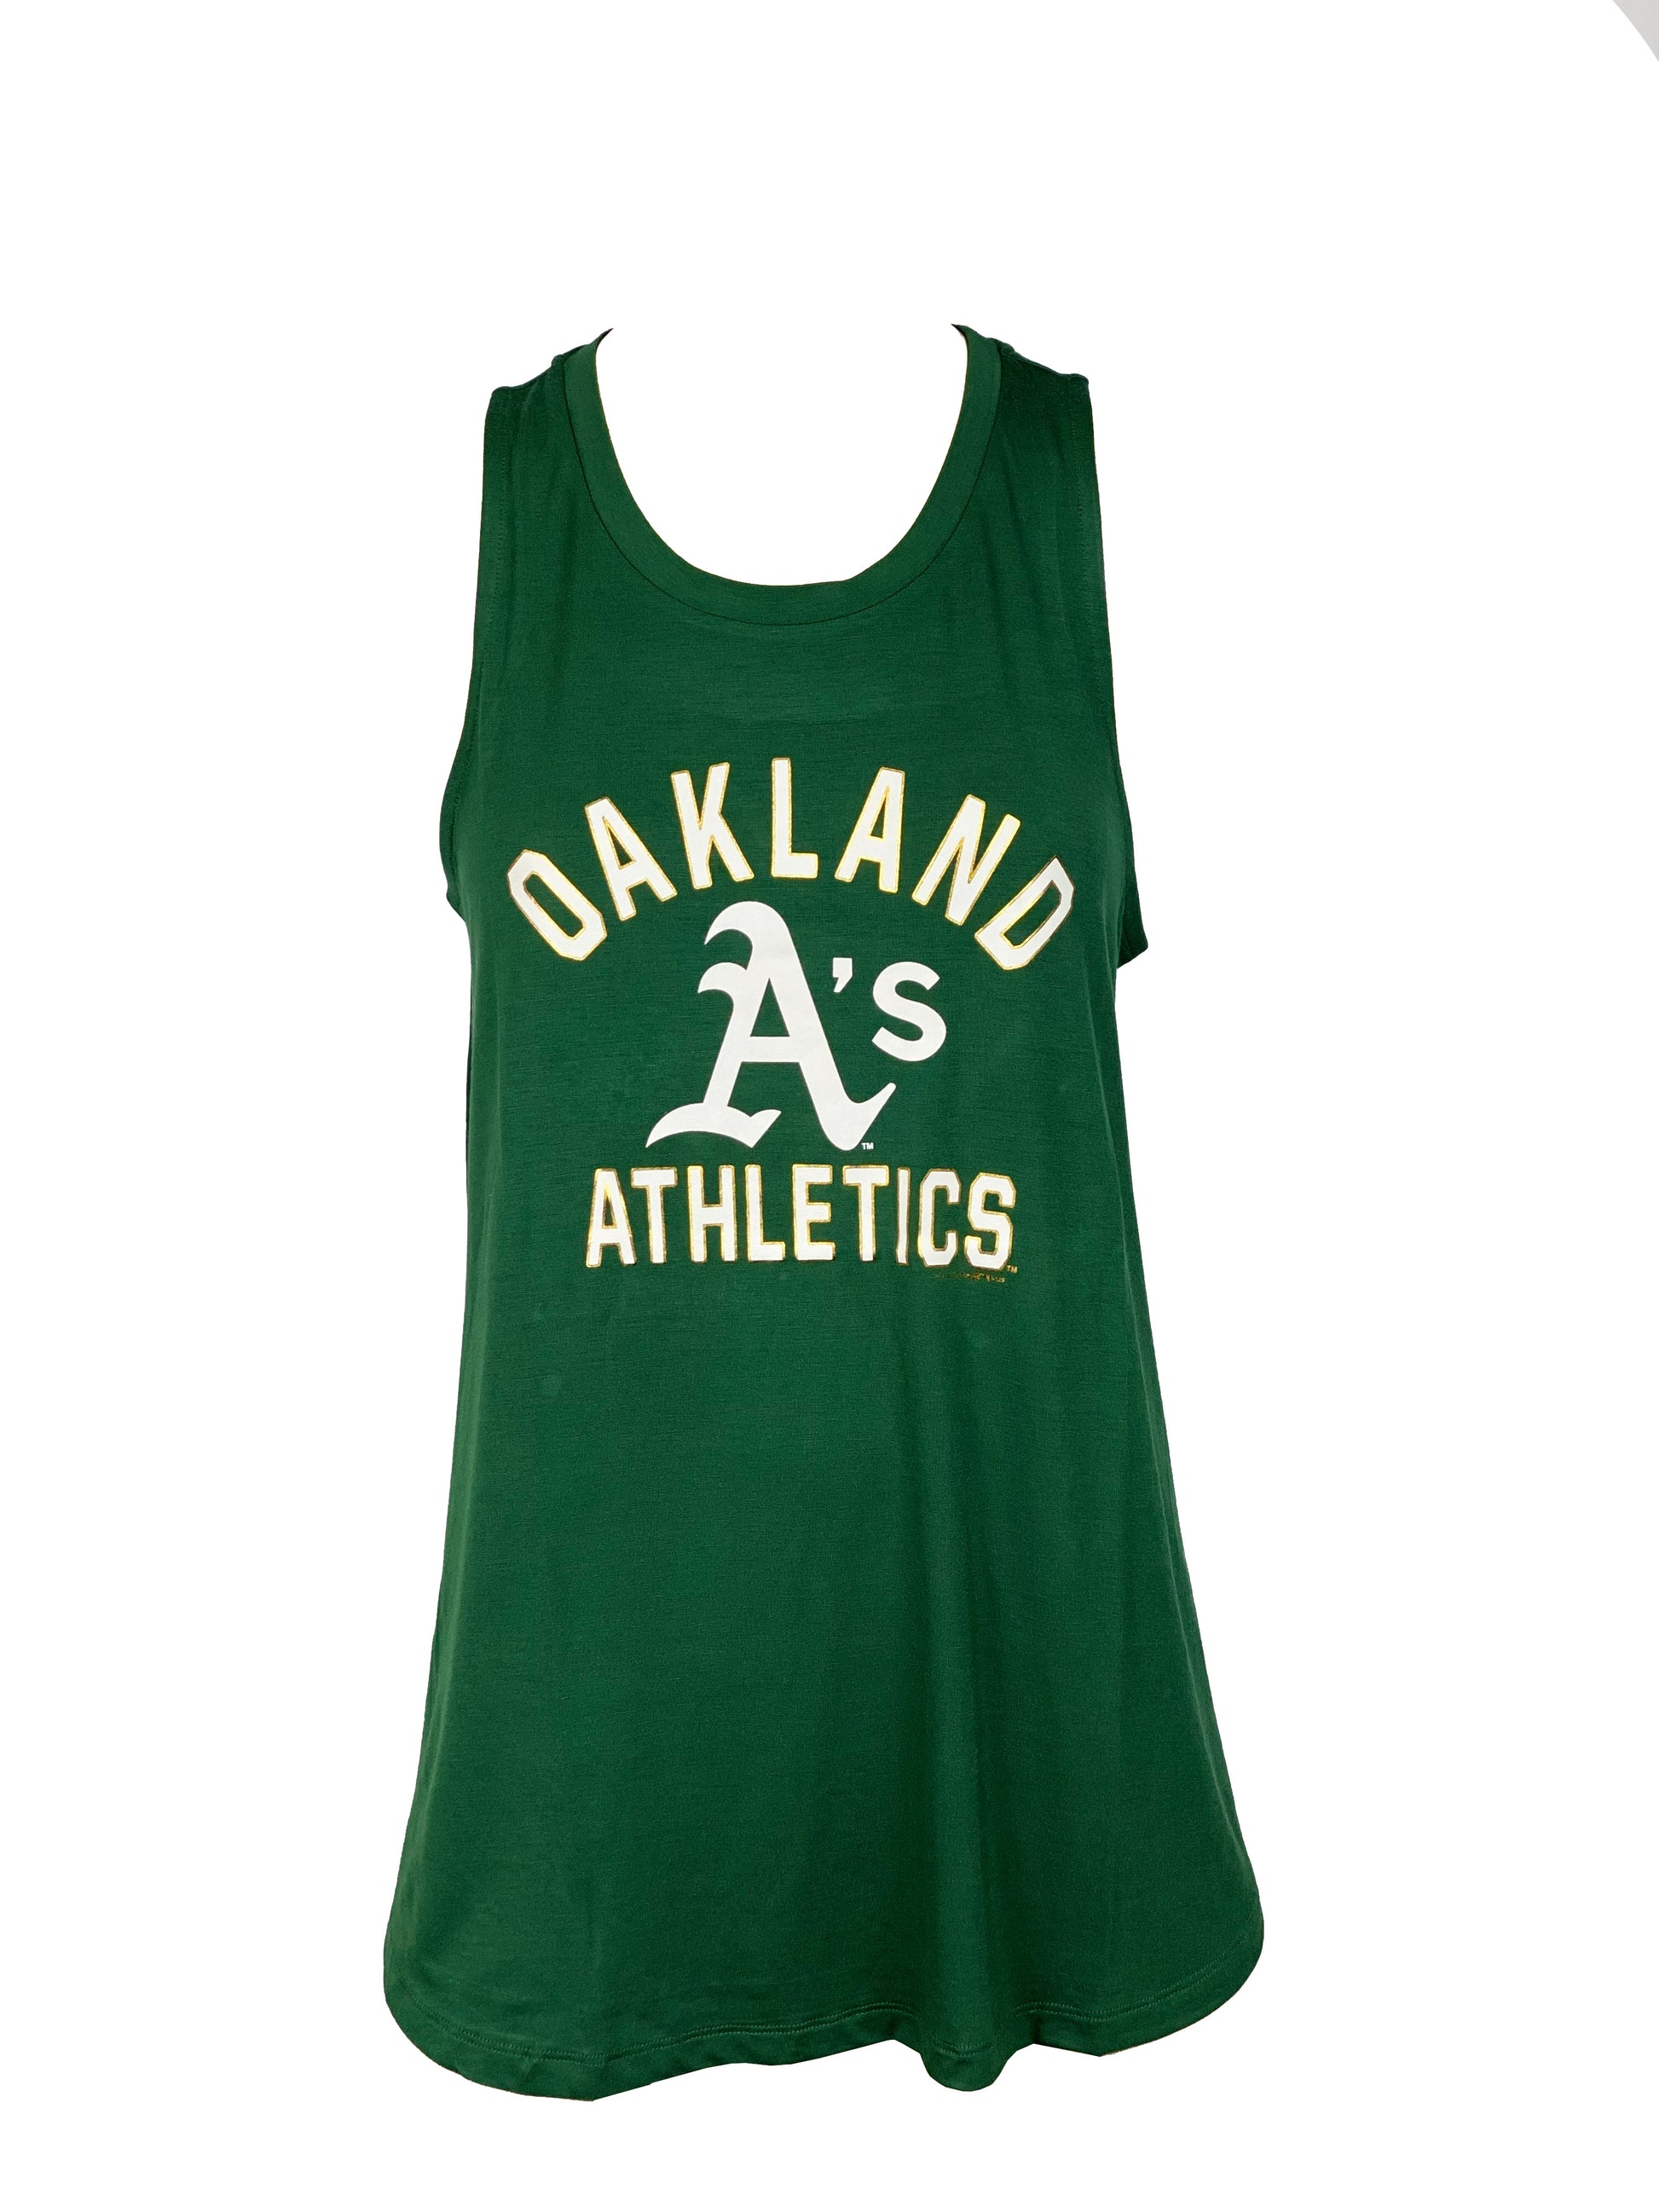 FIFTH&OCEAN Oakland Athletics Women's Script Logo Tank Top 20 / 2XL